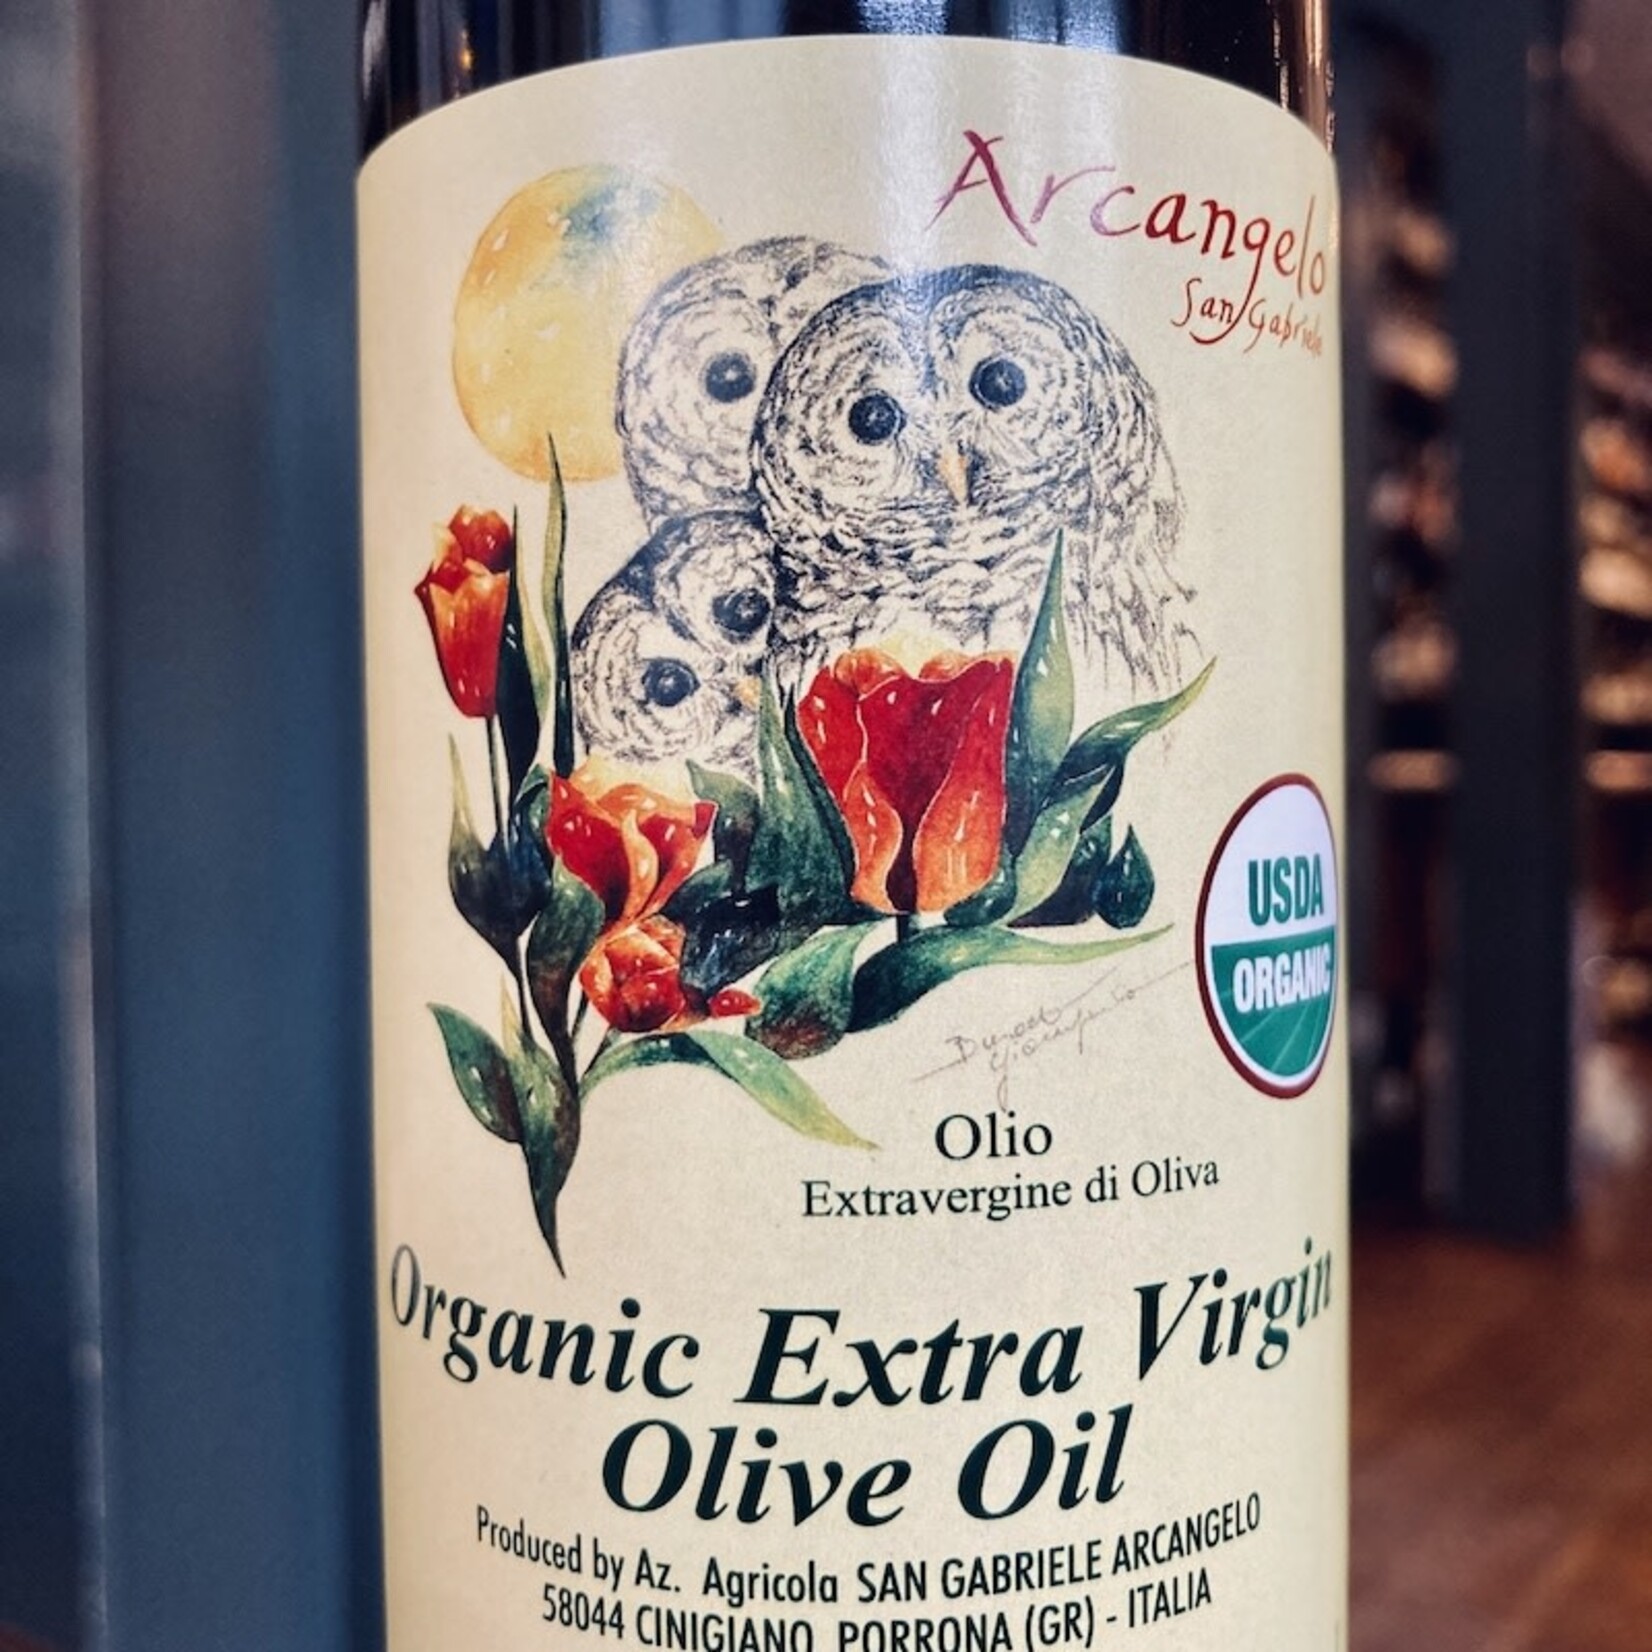 Italy S.G. Arcangelo Organic Extra Virgin Olive Oil